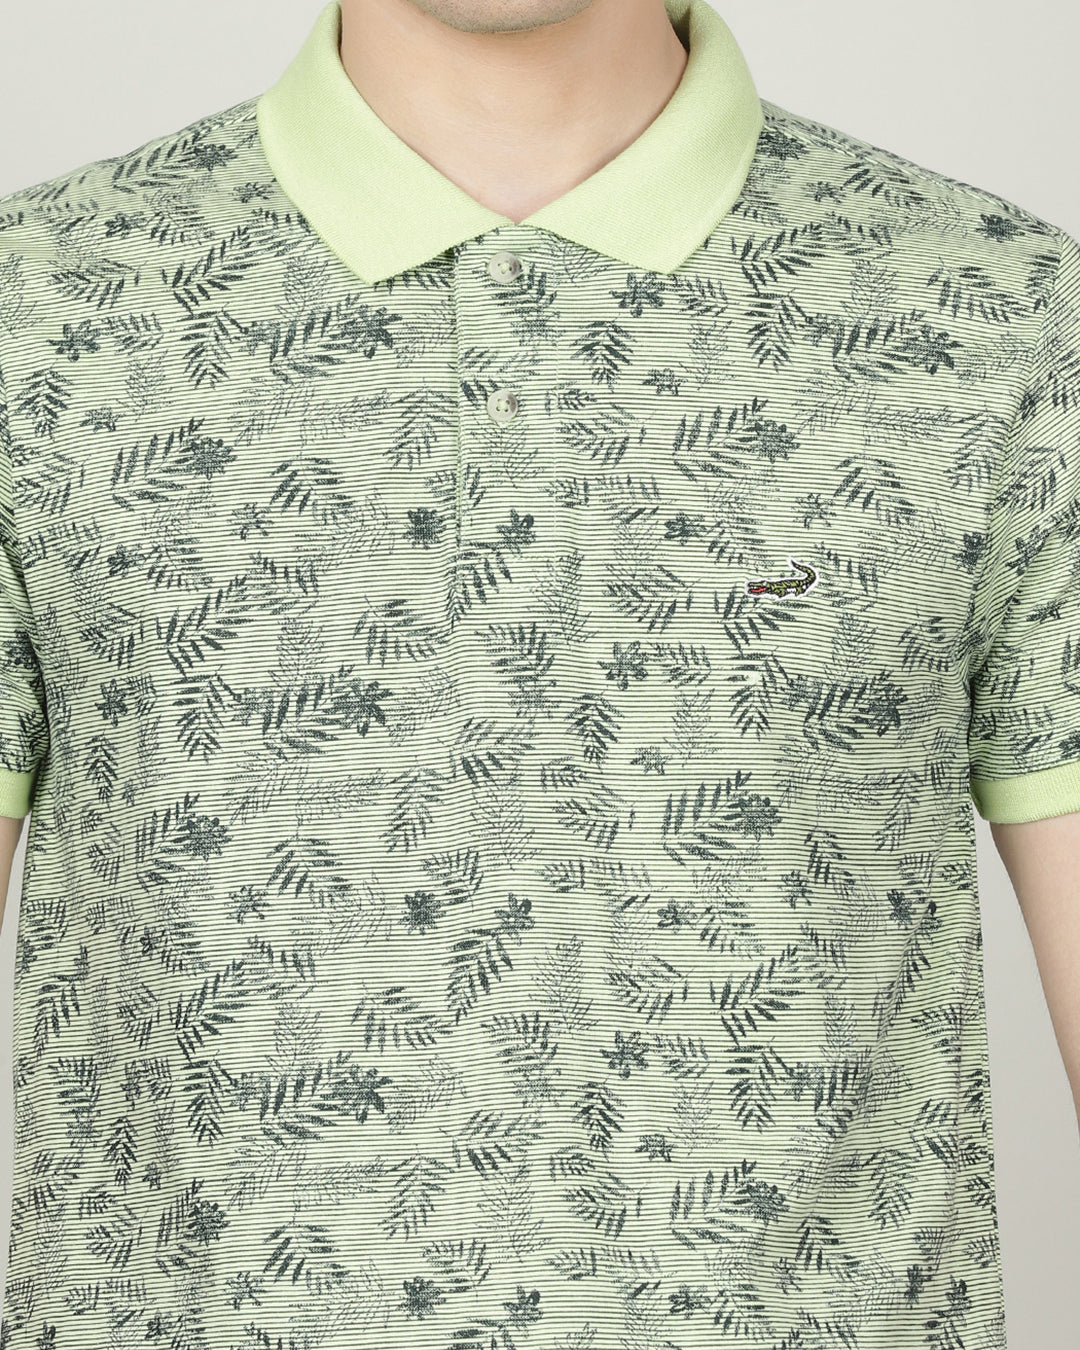 Crocodile Men's Green Polo T-Shirt Online